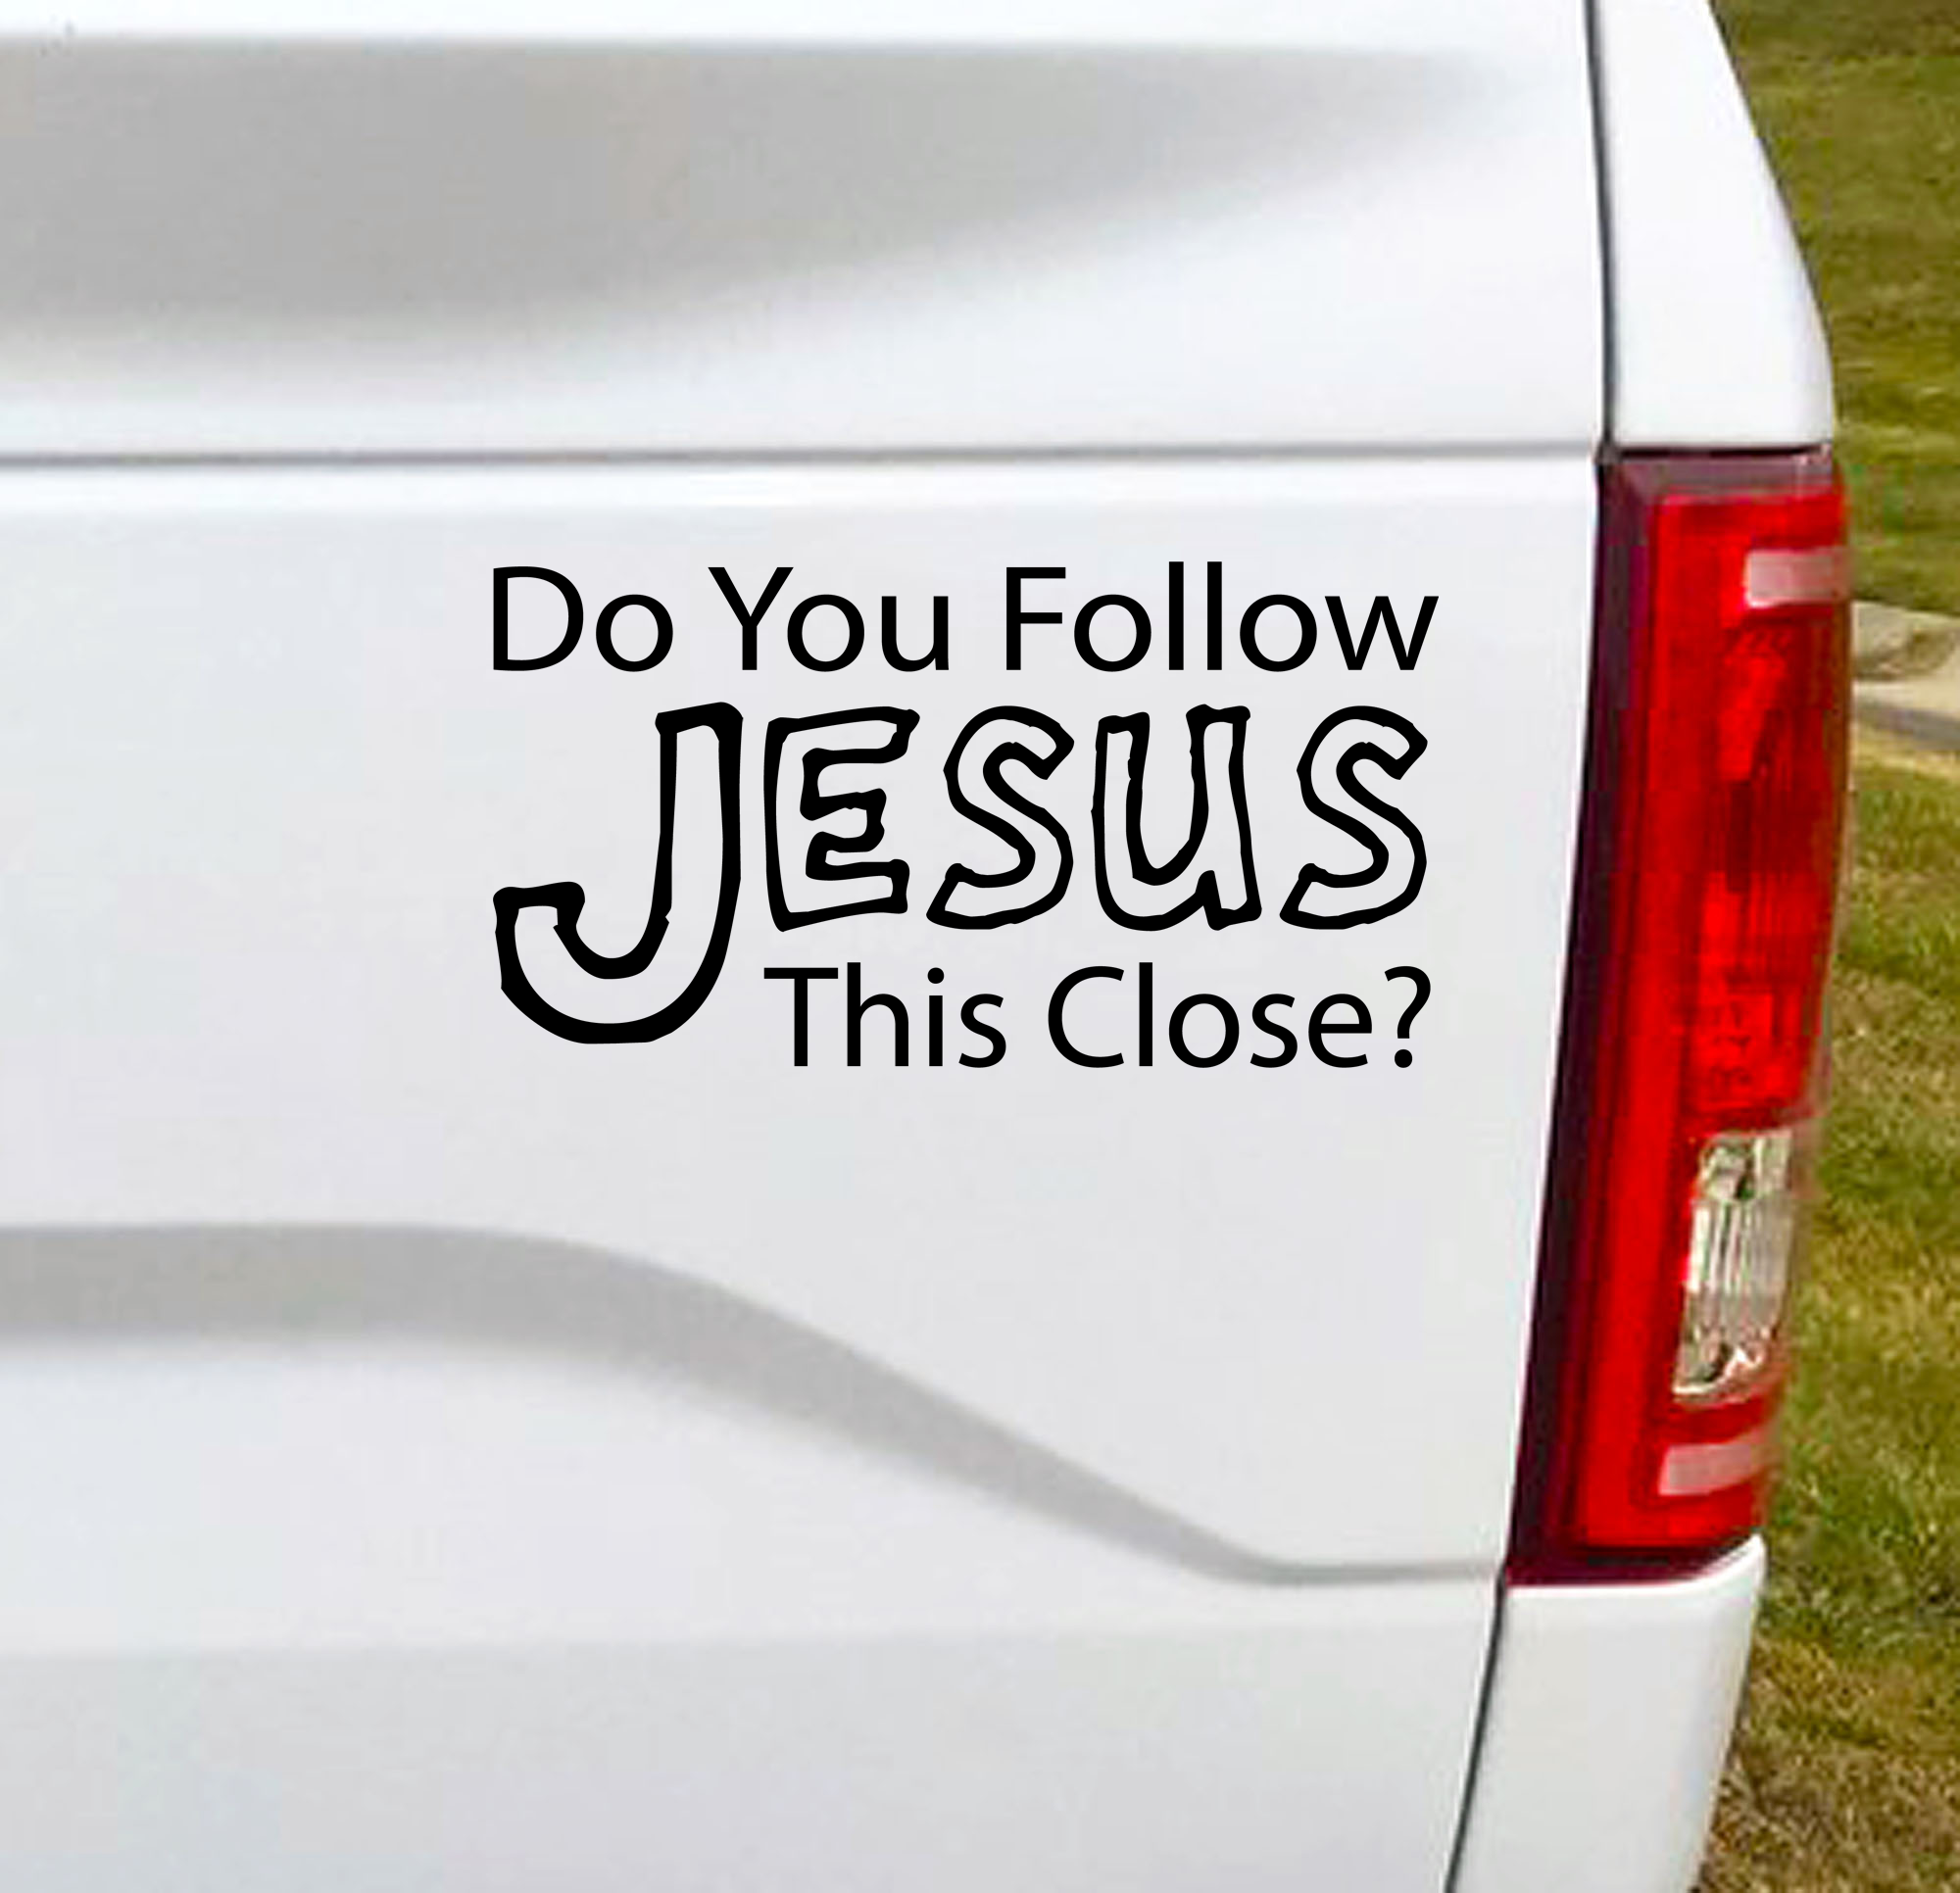 Do You Follow Jesus This Close - Vinyl Car Decal Bumper Sticker – Keener  Gifts